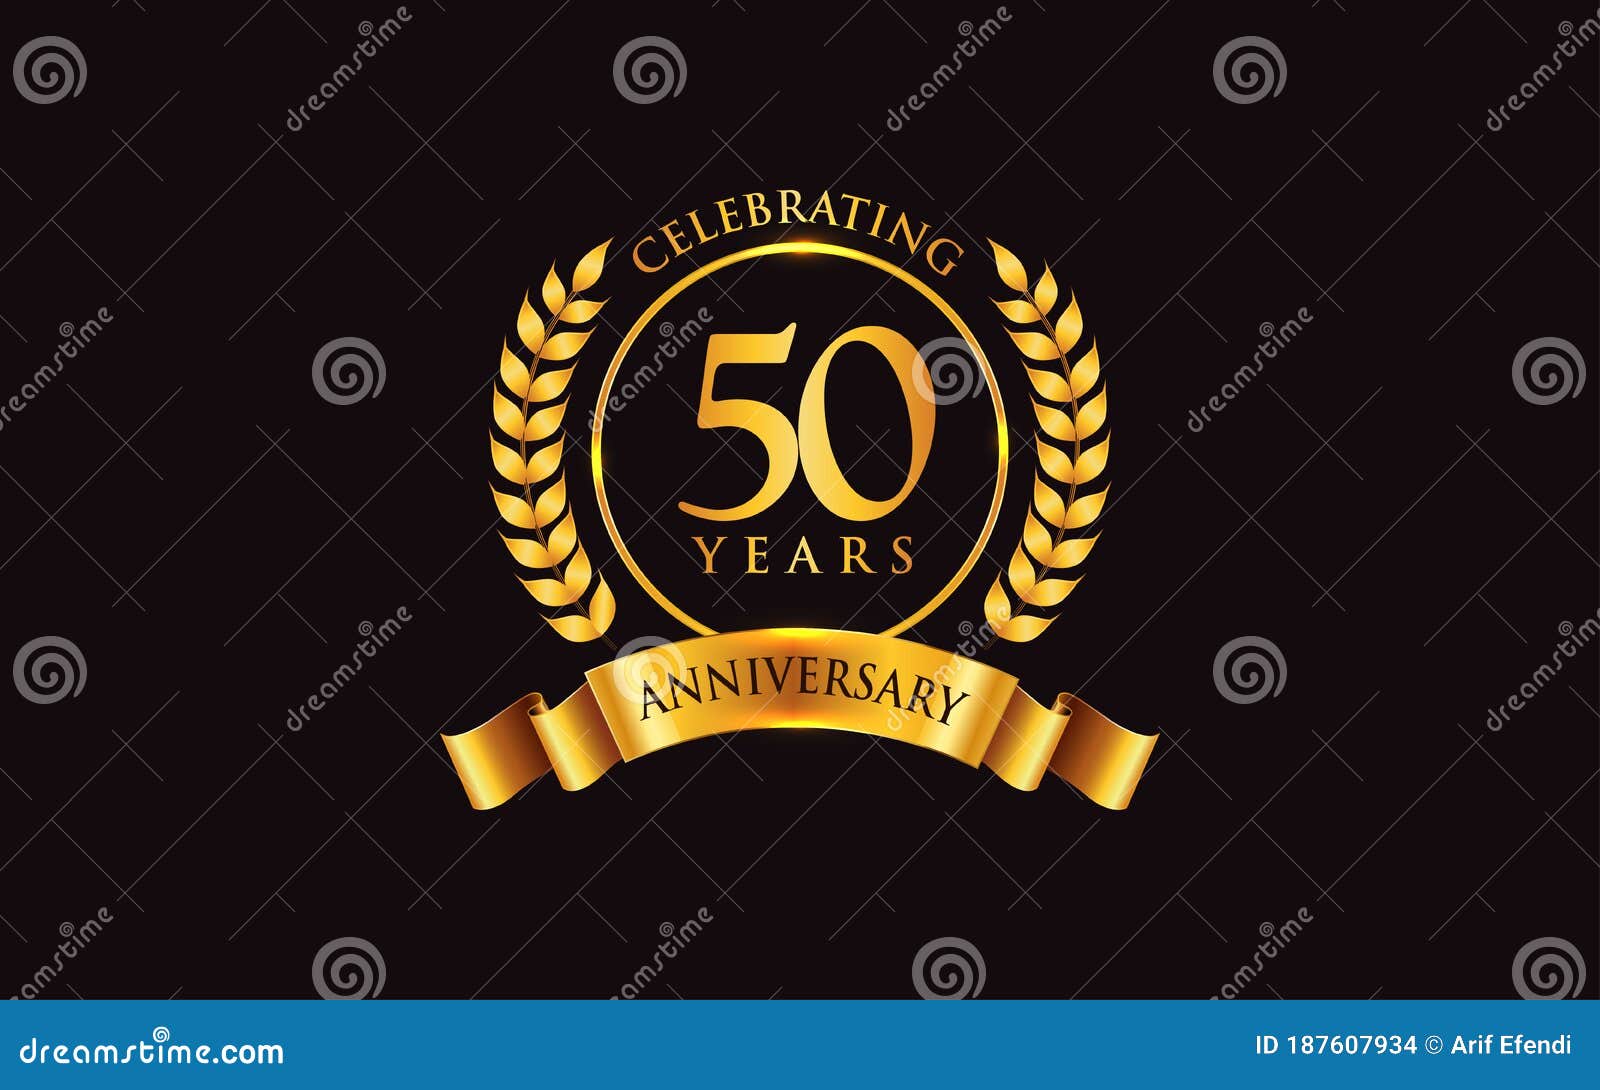 50th Anniversary Celebration Banner Template Stock Vector 